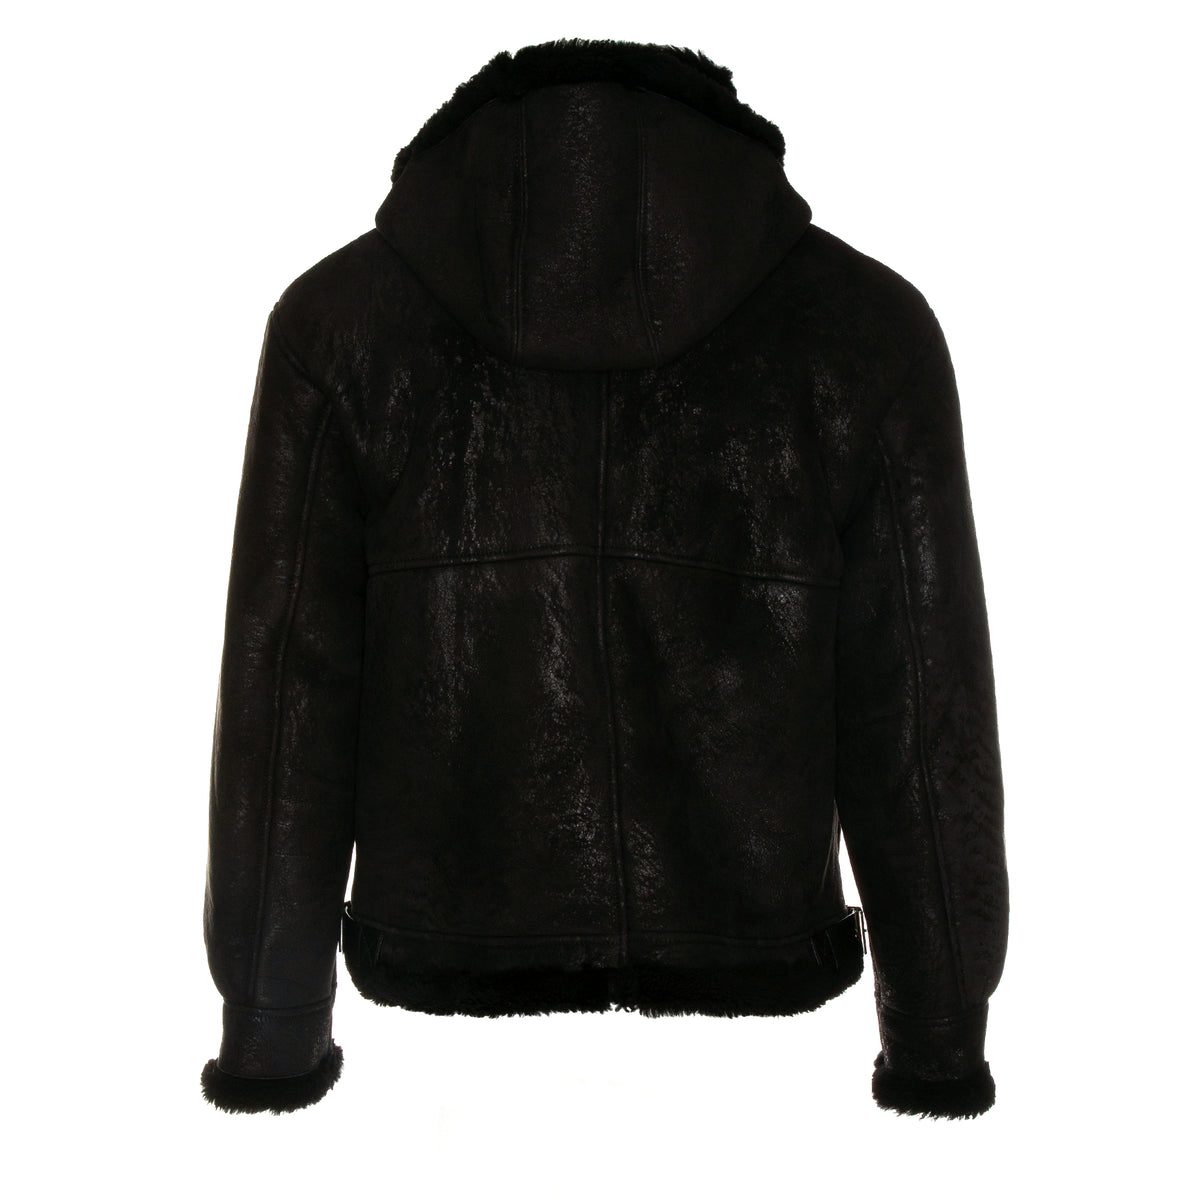 Represent Cracked Shearling Jacket Black